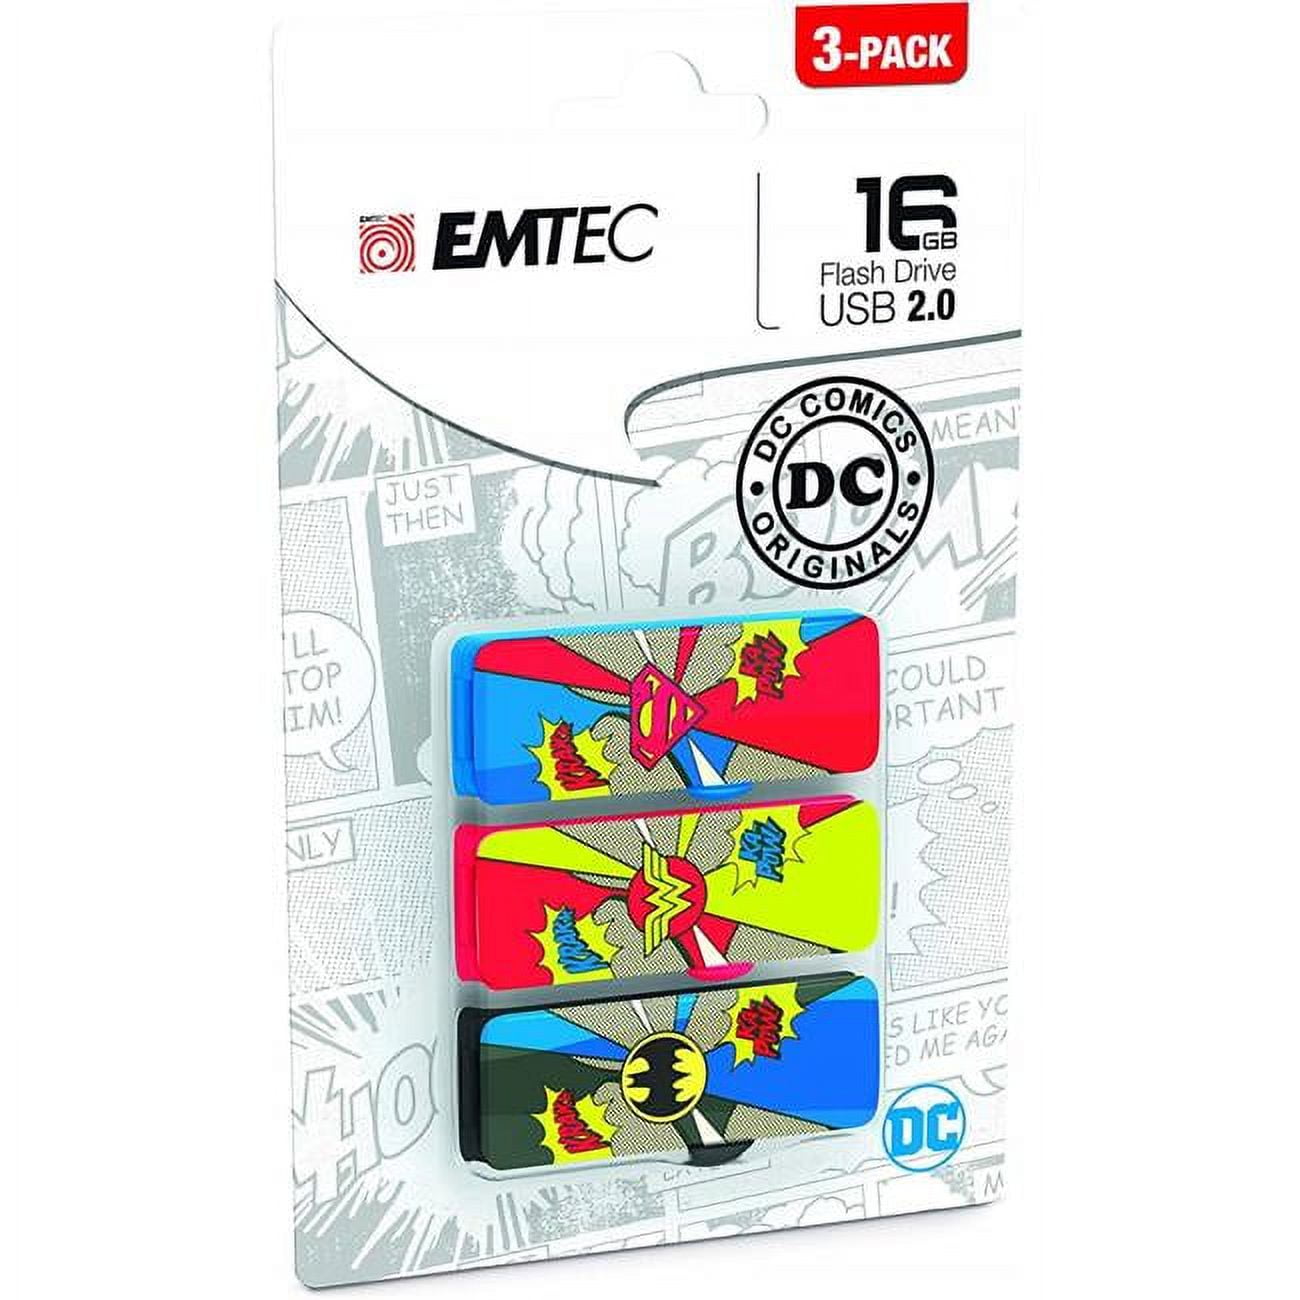 Picture of Emtec ECMMD16GM700SHP3 16 GB M700 Super Hero Flash Drive, Pack of 3